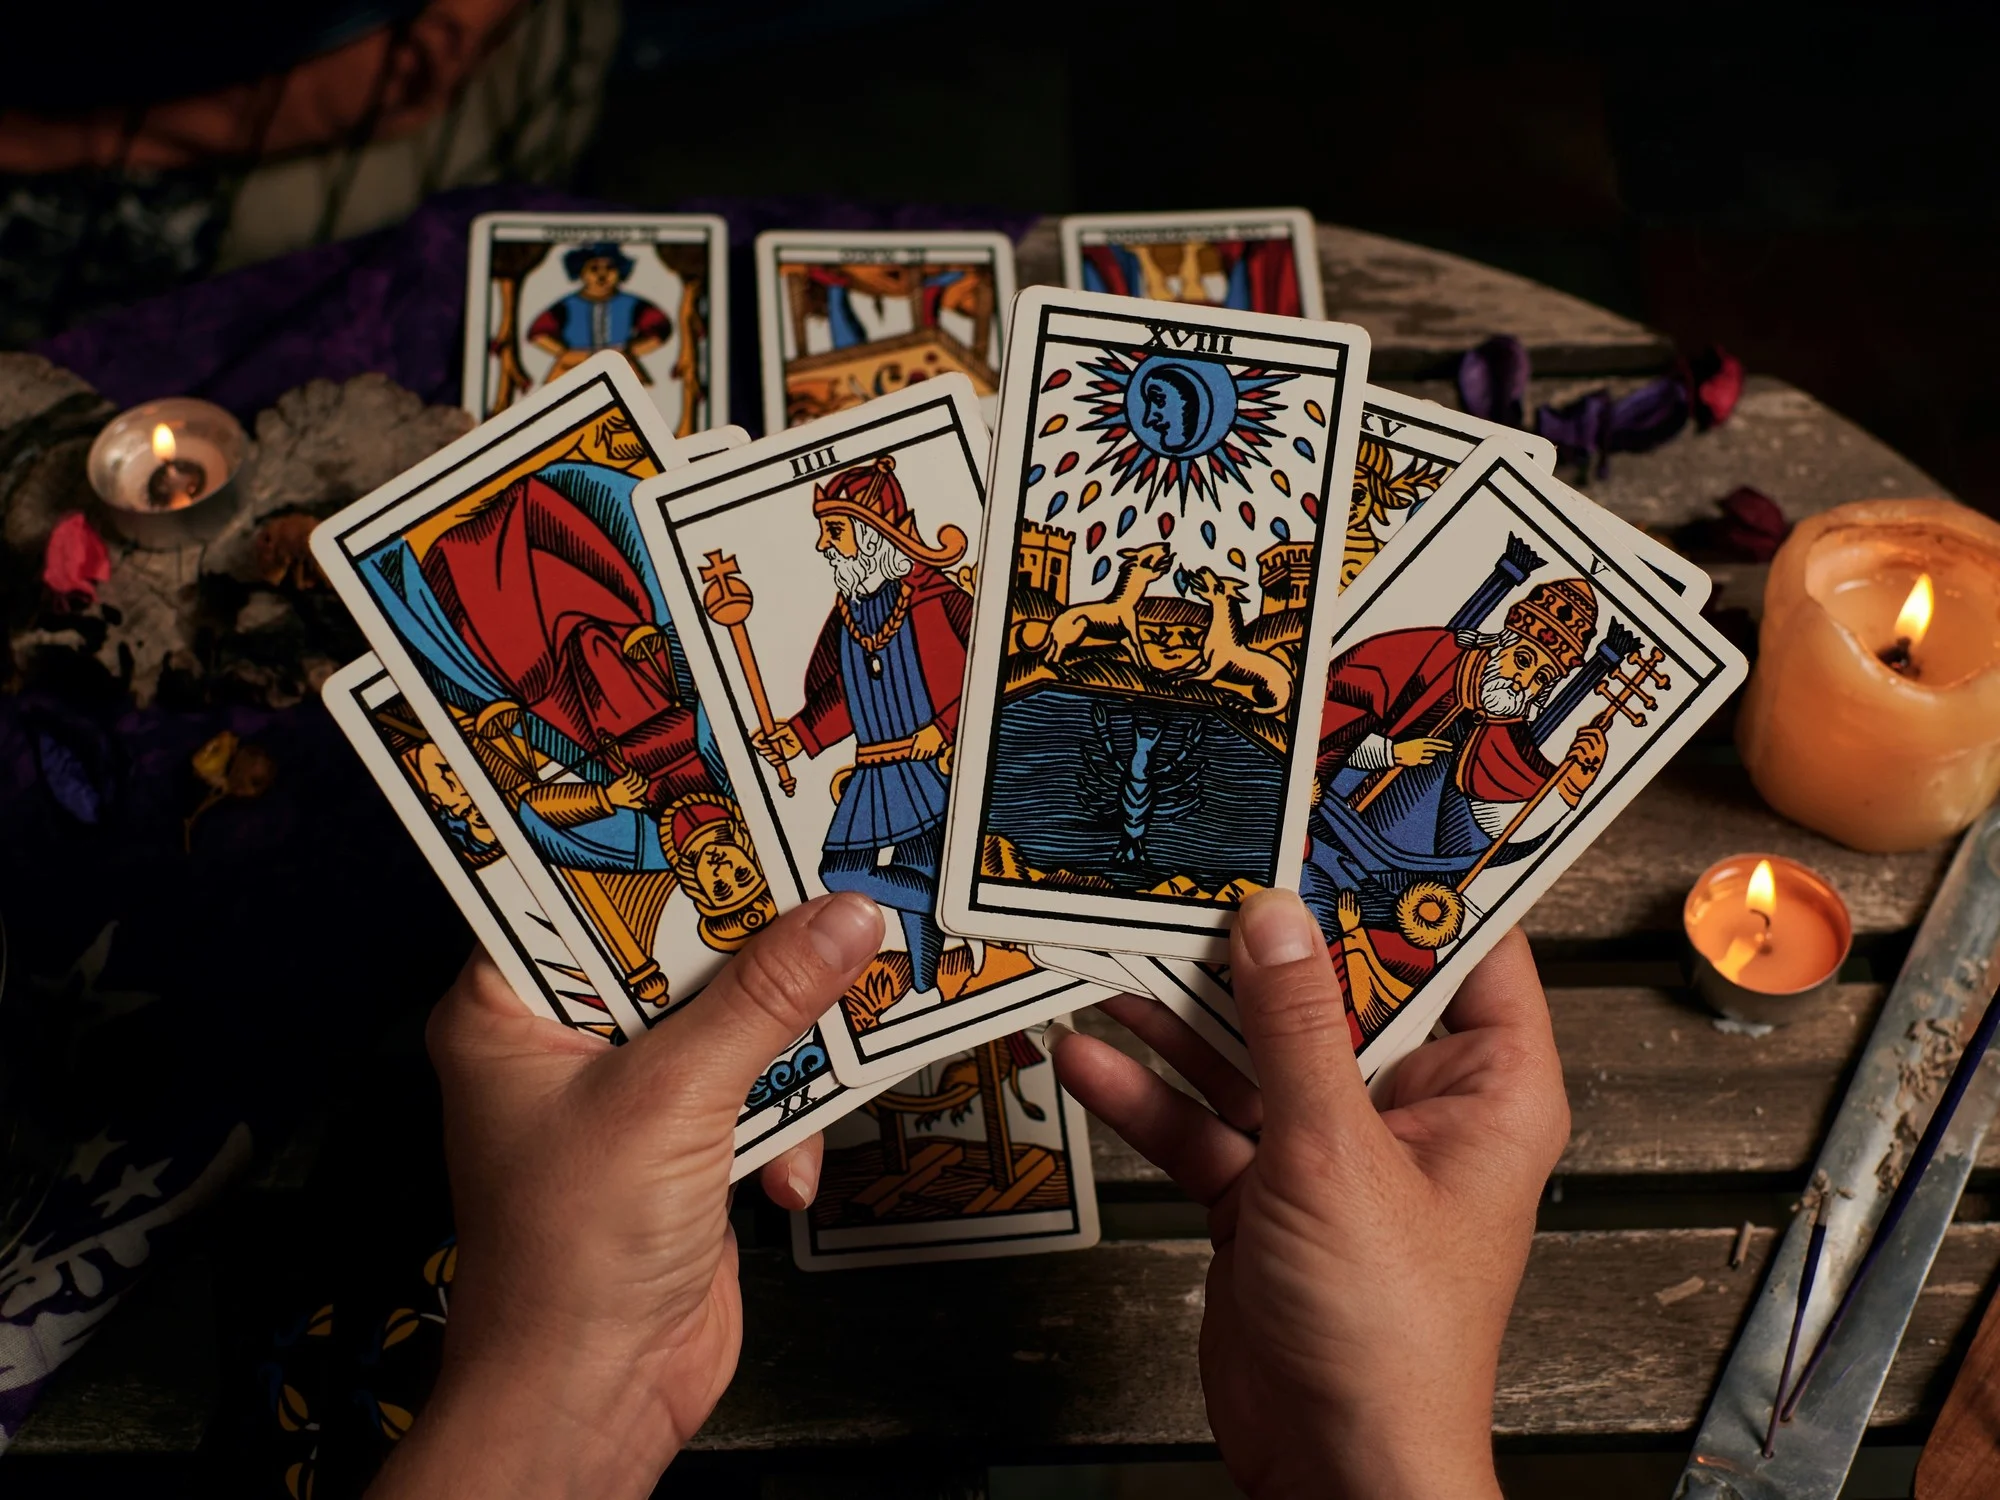  ¿Dónde se originó la lectura de cartas del tarot?
 